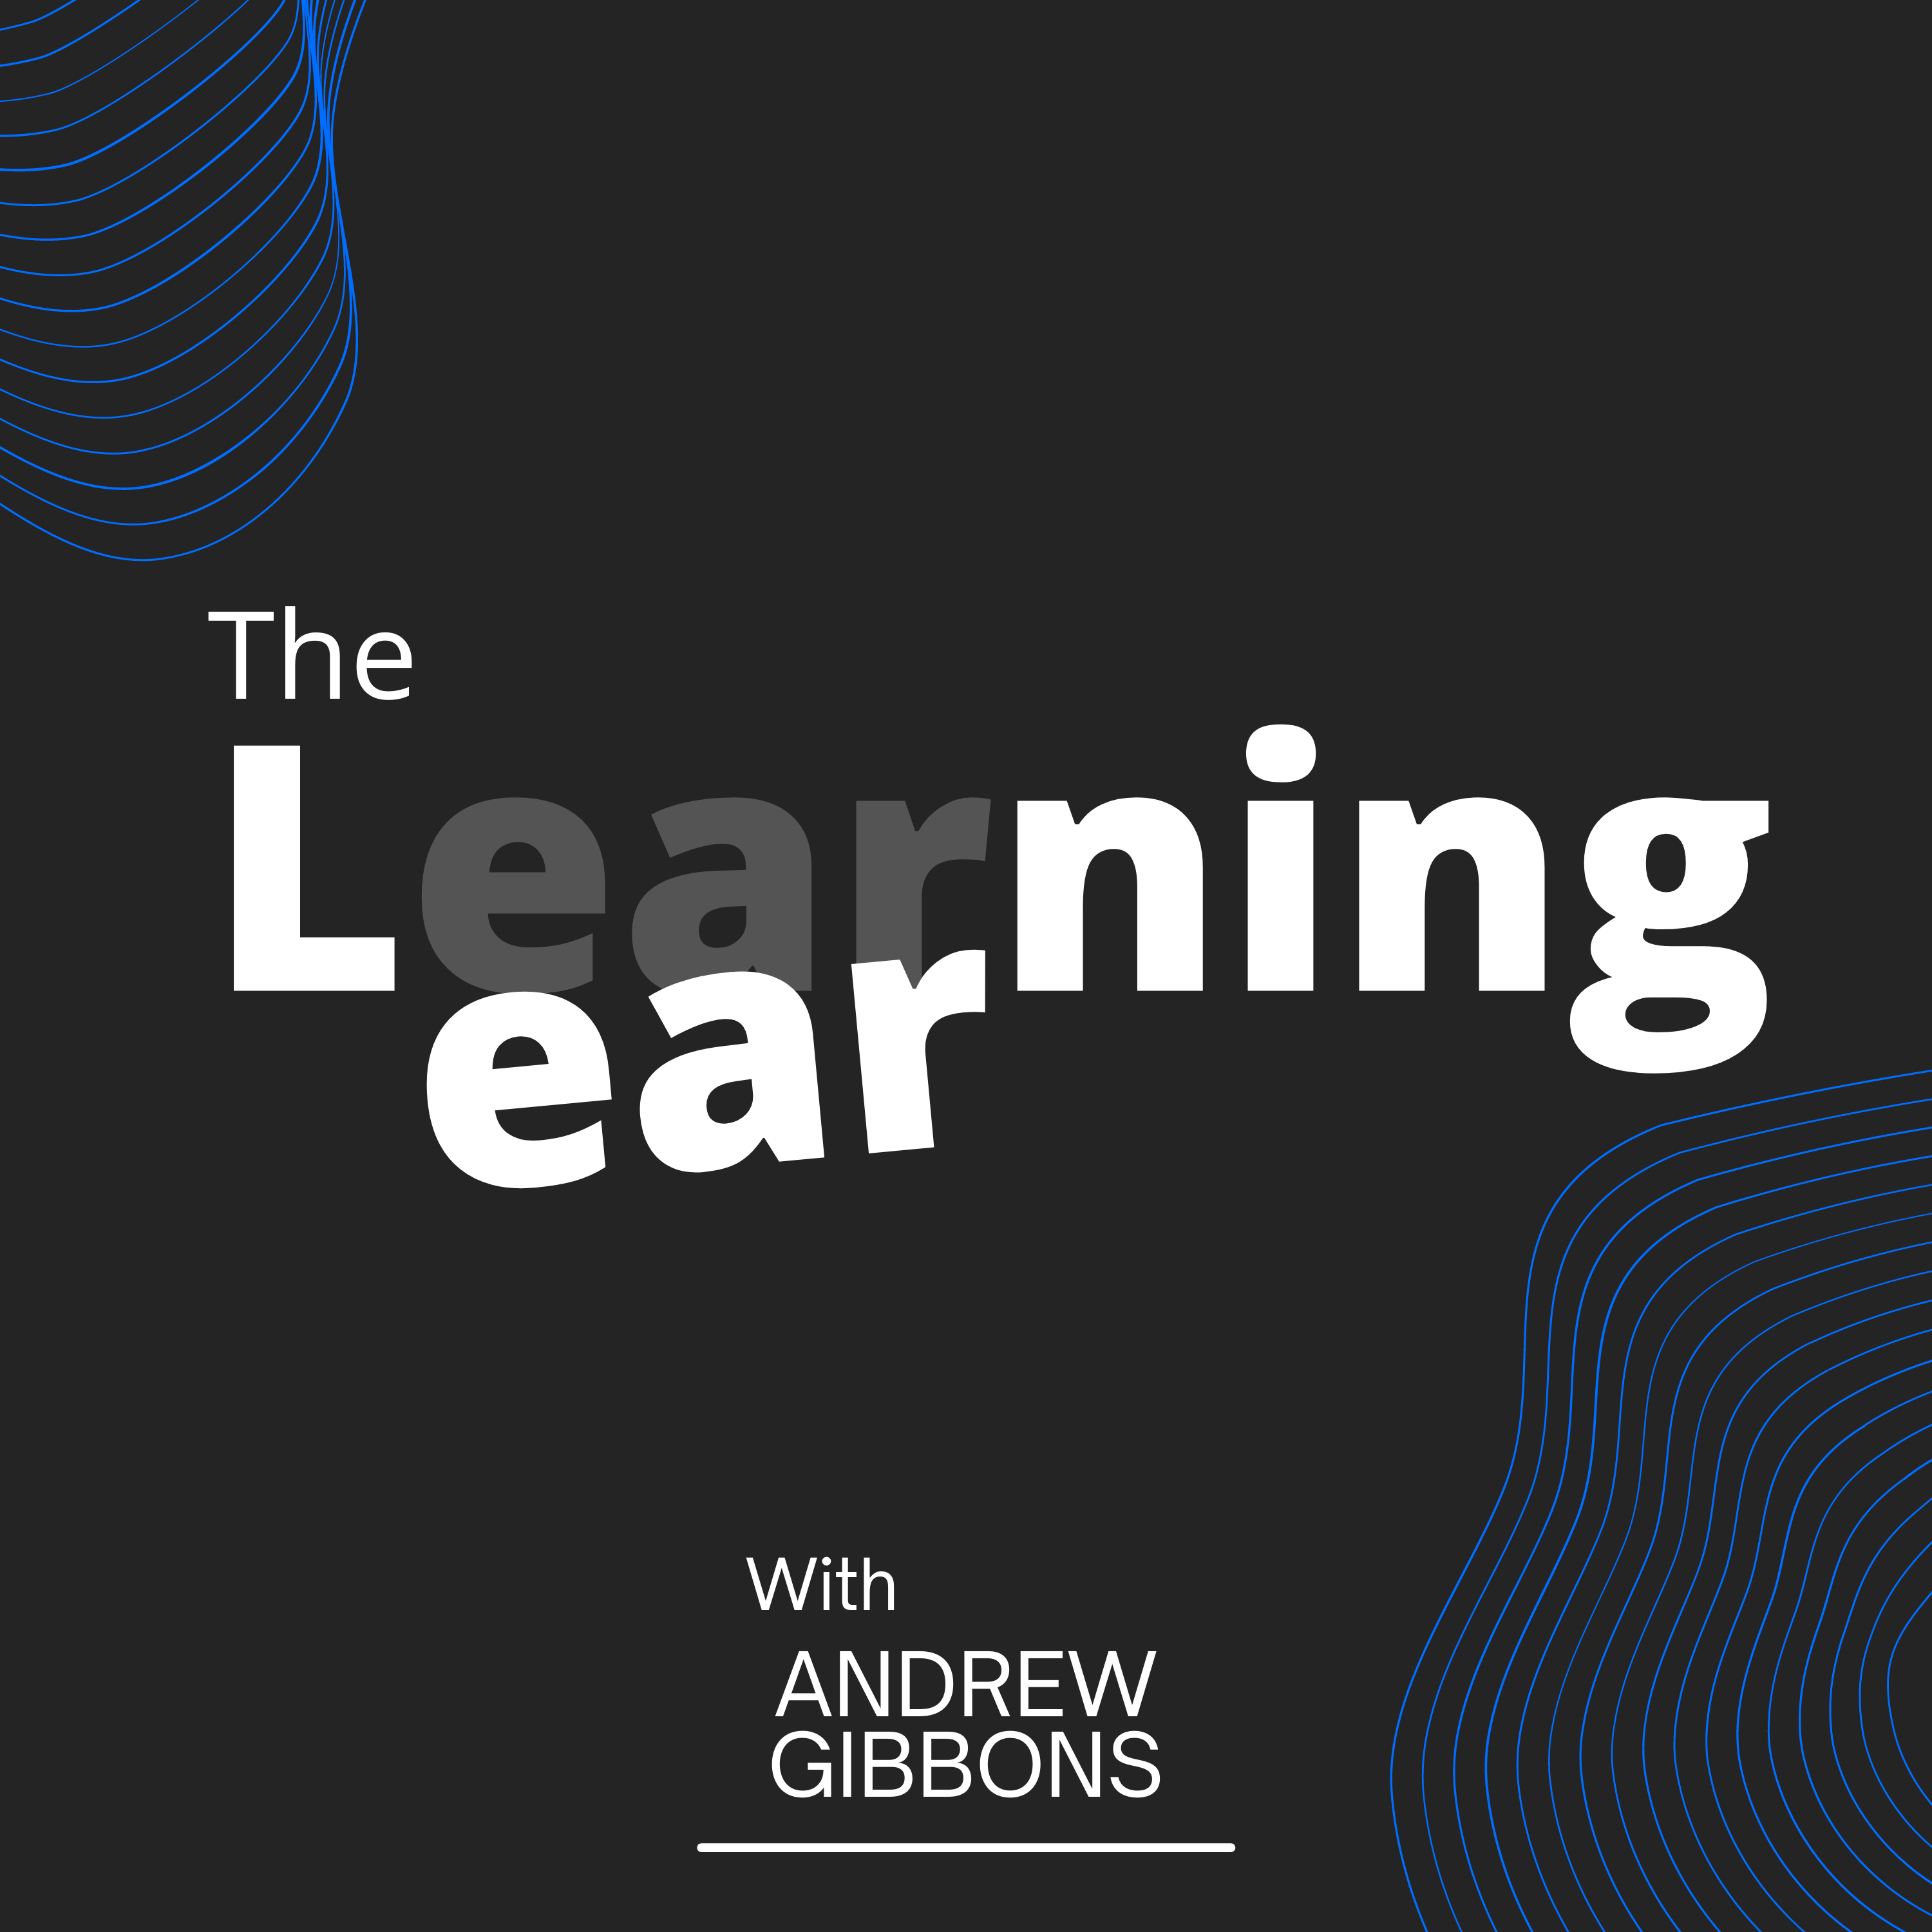 The learning ear